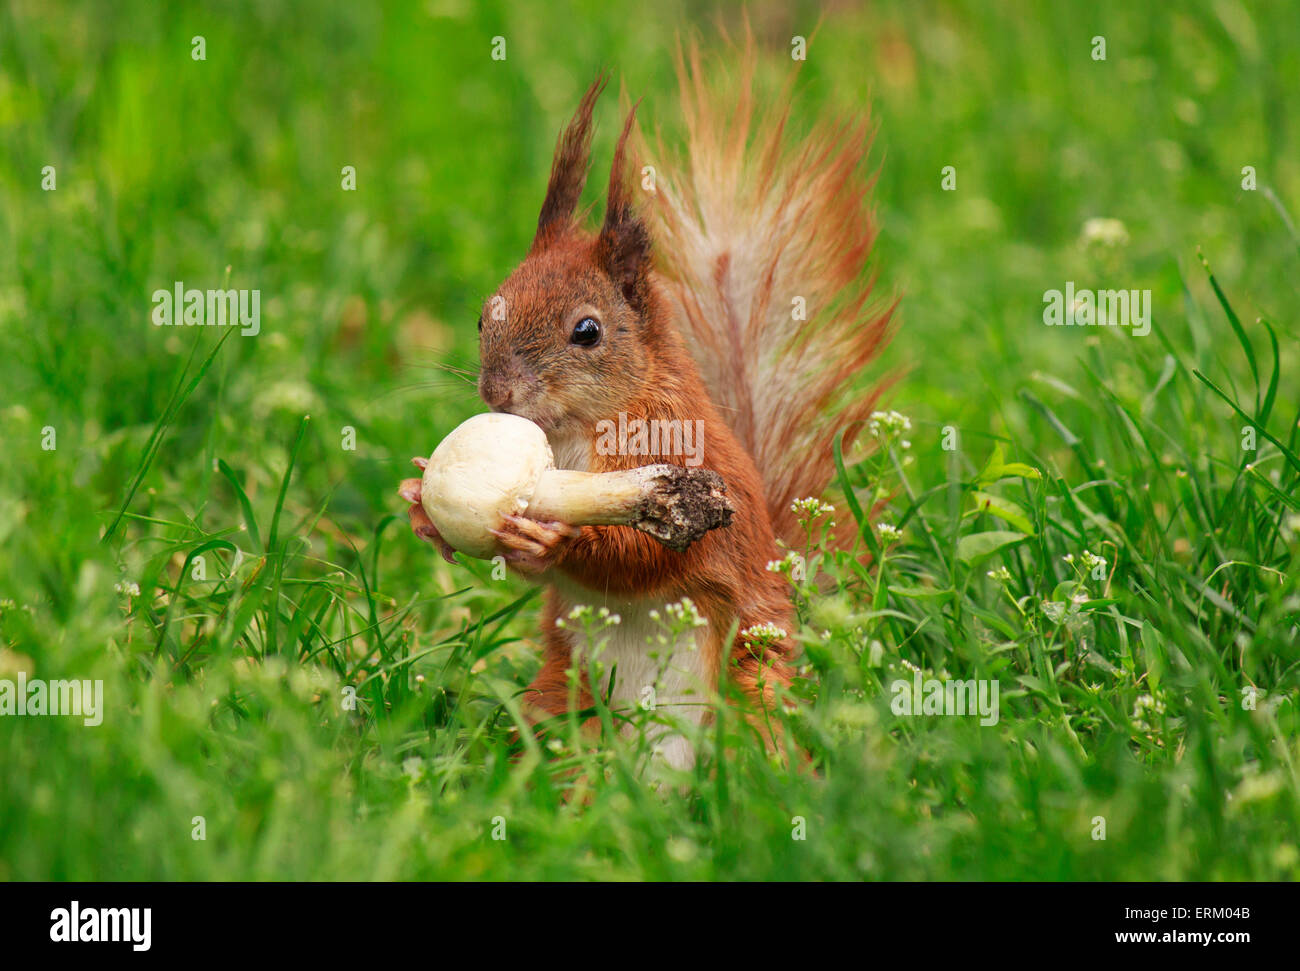 squirrel eating field mushroom in green grass Stock Photo